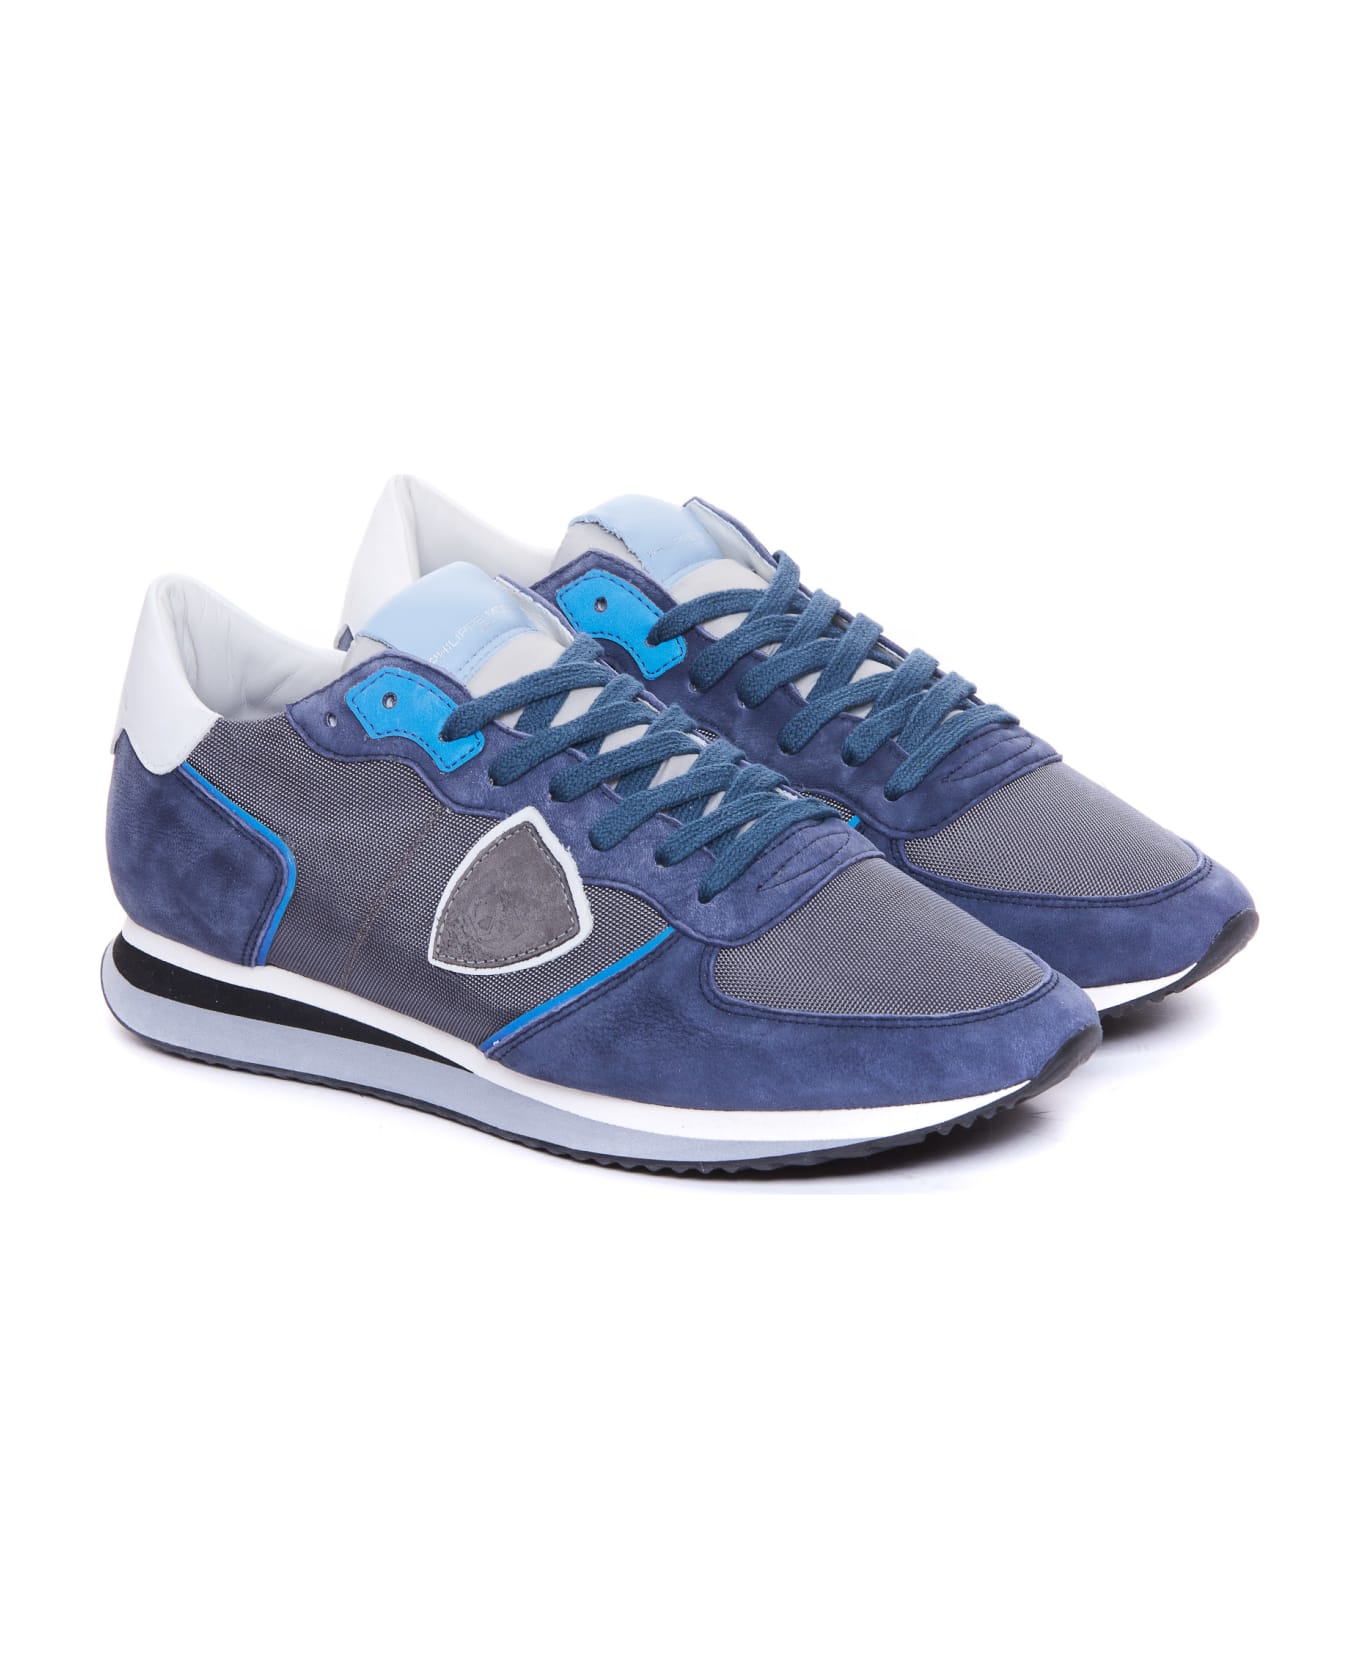 Philippe Model Trpx Sneakers - Blue